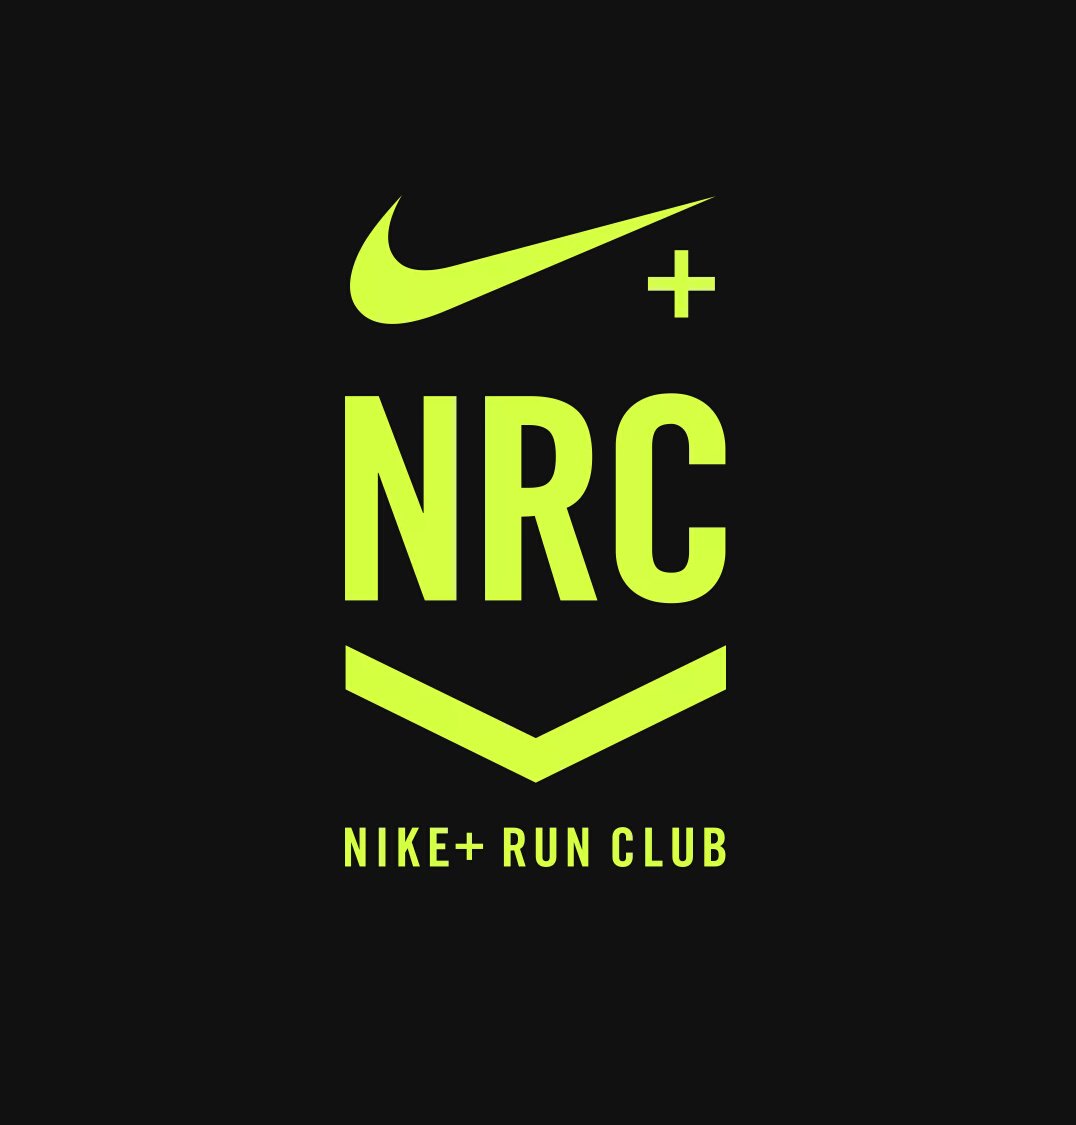 Come run with us at NIKE+ RUN CLUB JOBURG. Register here: nike.com/events-registr… #nikerunclub #BraamfieRunners #nrcjoburg